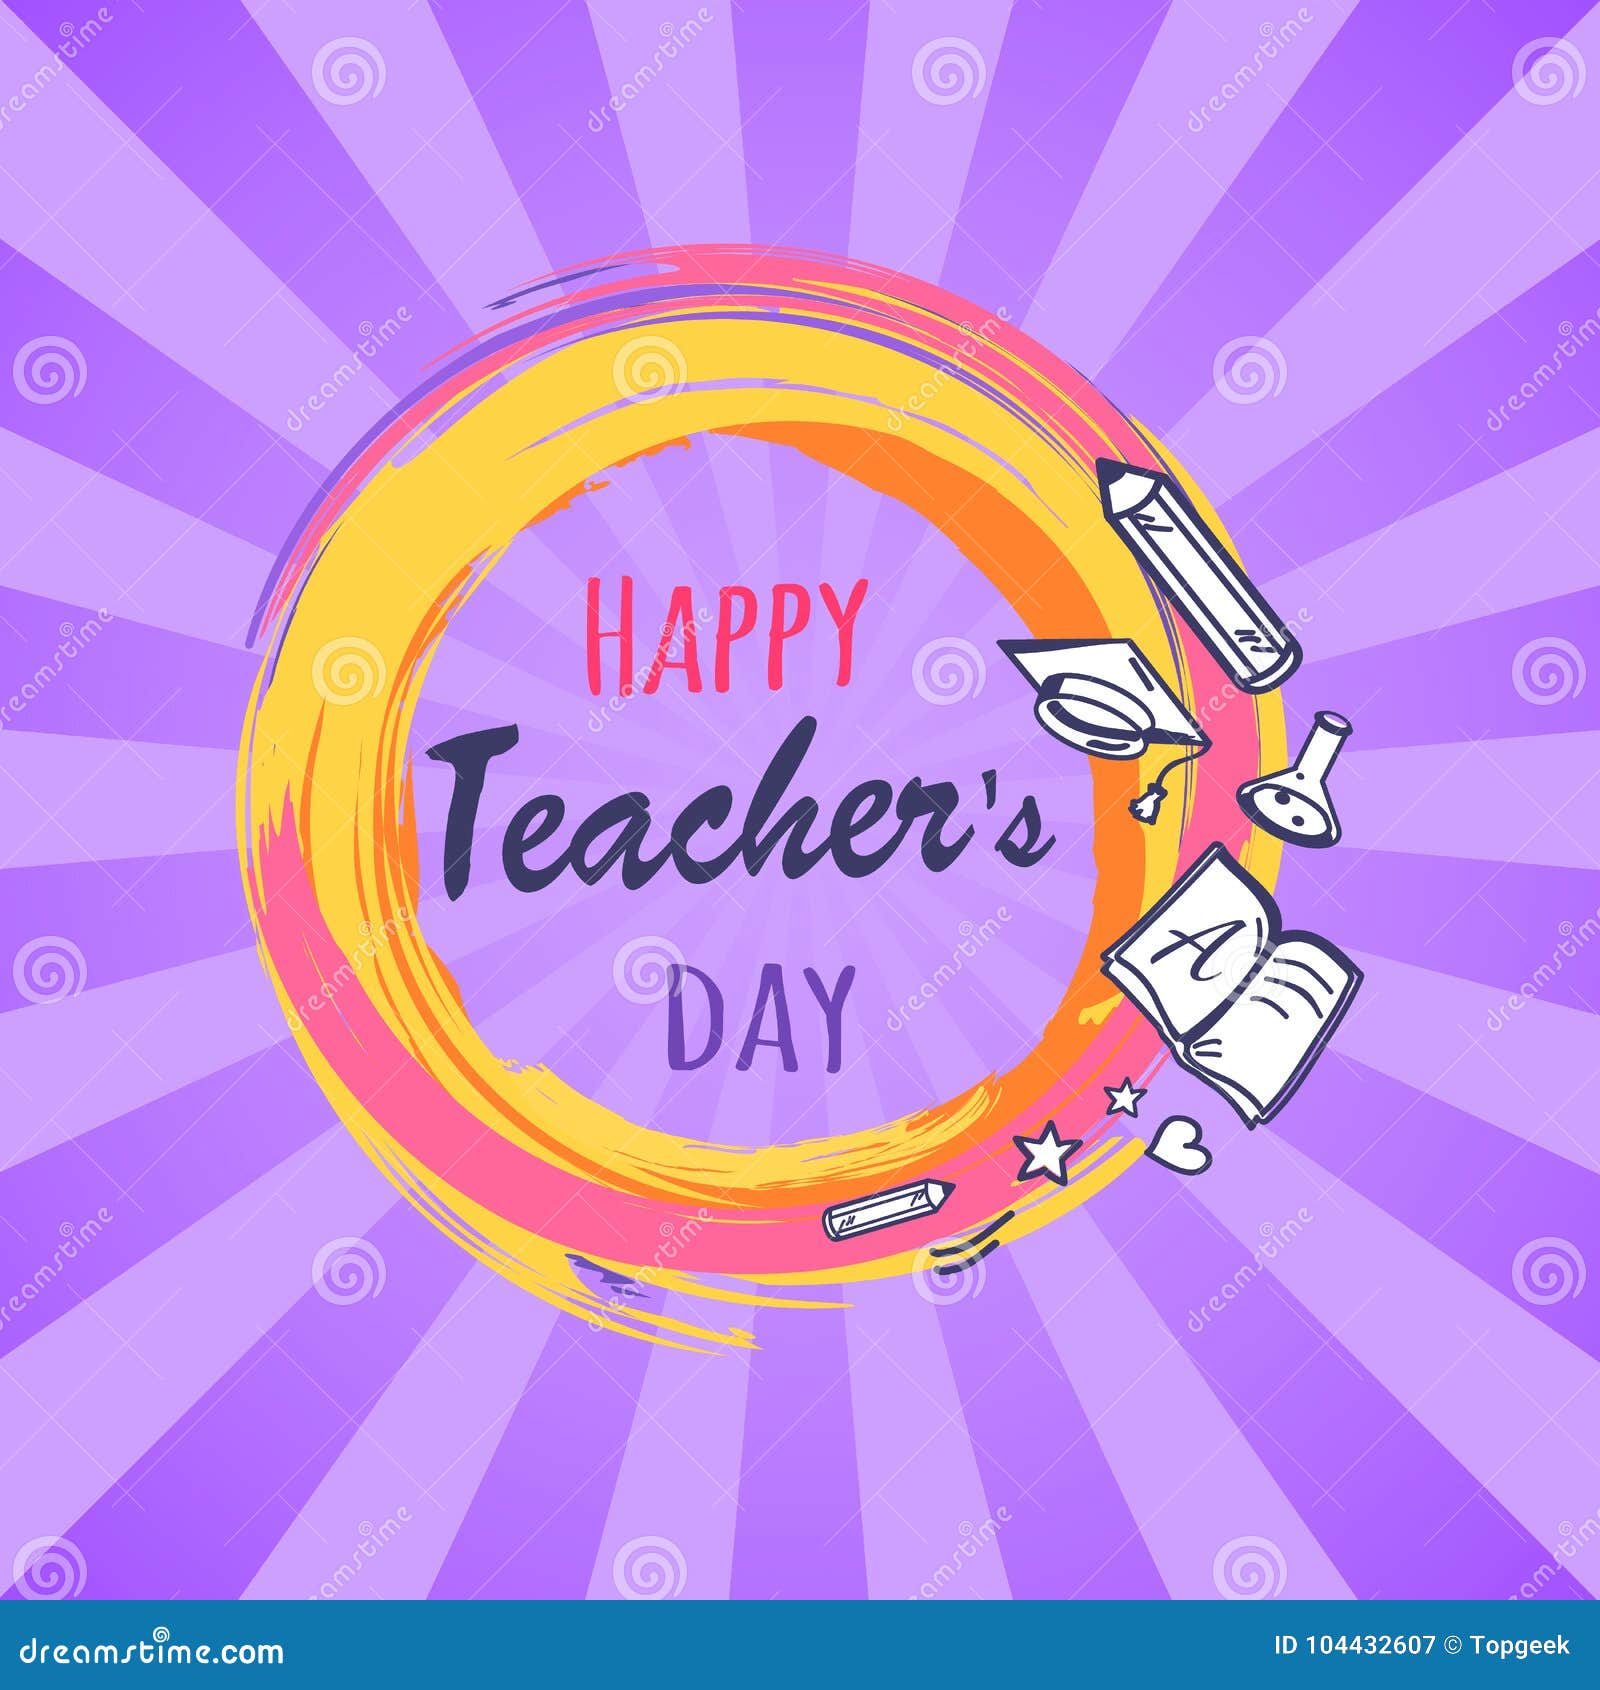 Happy Teachers Day Poster Vector Illustration Stock Vector ...